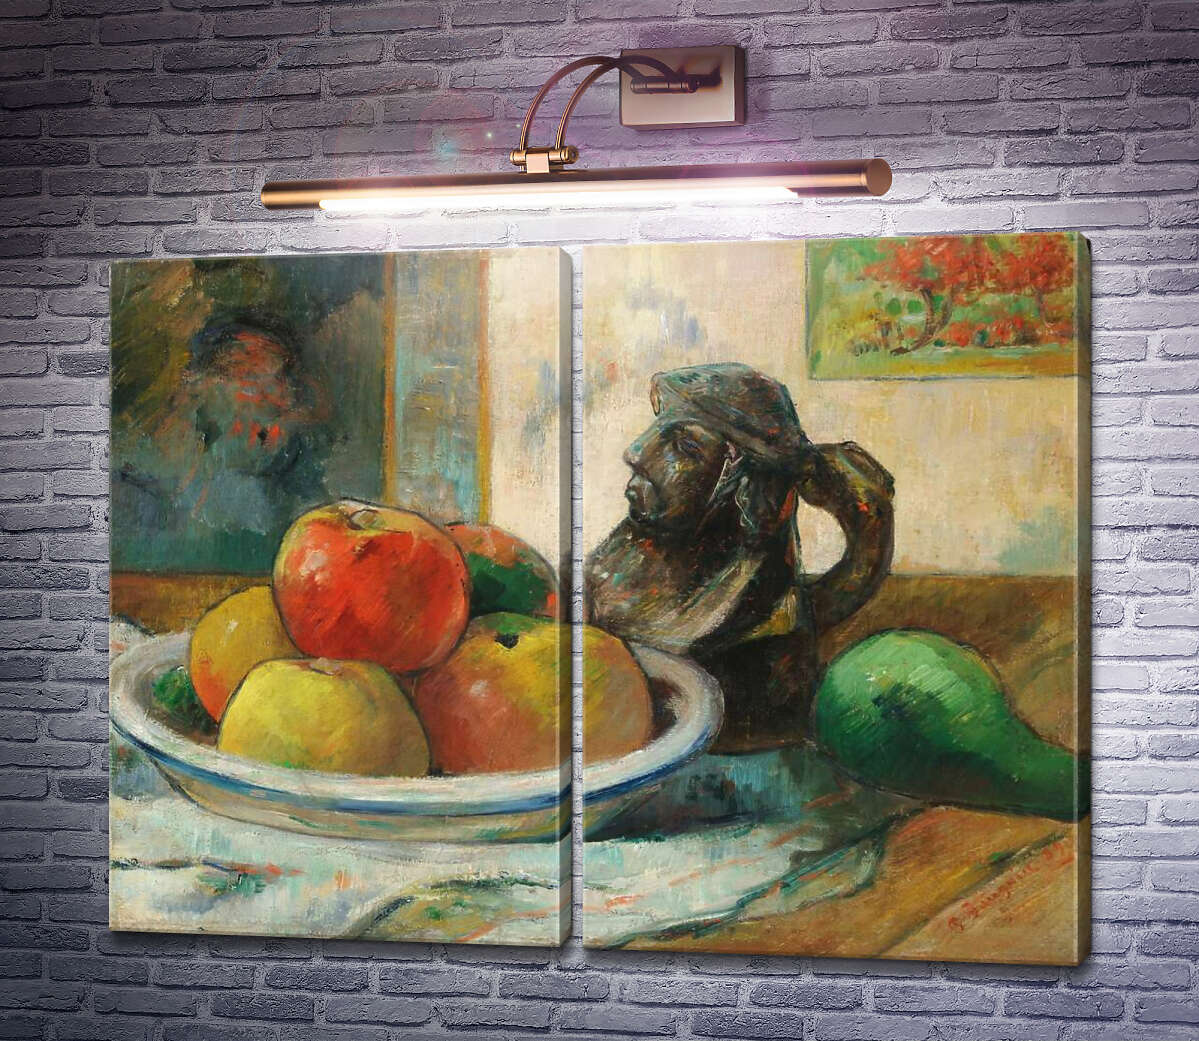 Модульна картина Яблука, груші і горщик, 1889 Поль Гоген